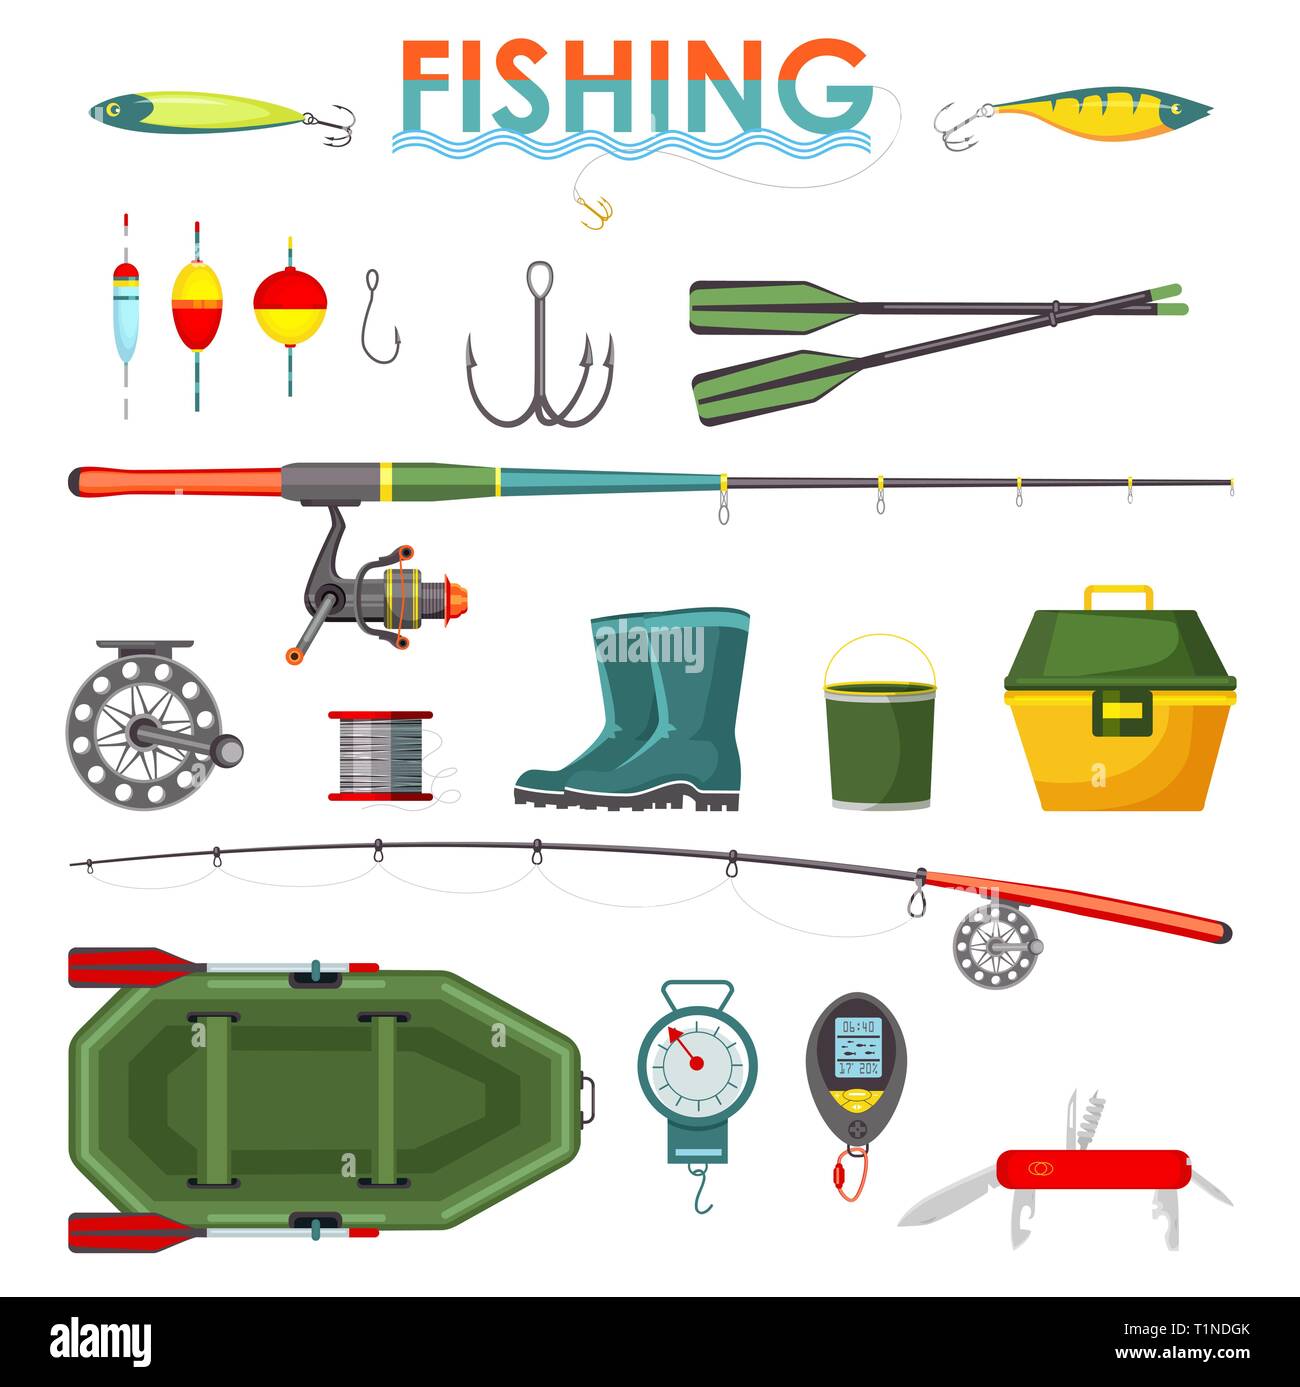 https://c8.alamy.com/comp/T1NDGK/set-of-isolated-fishing-items-or-equipment-rod-T1NDGK.jpg